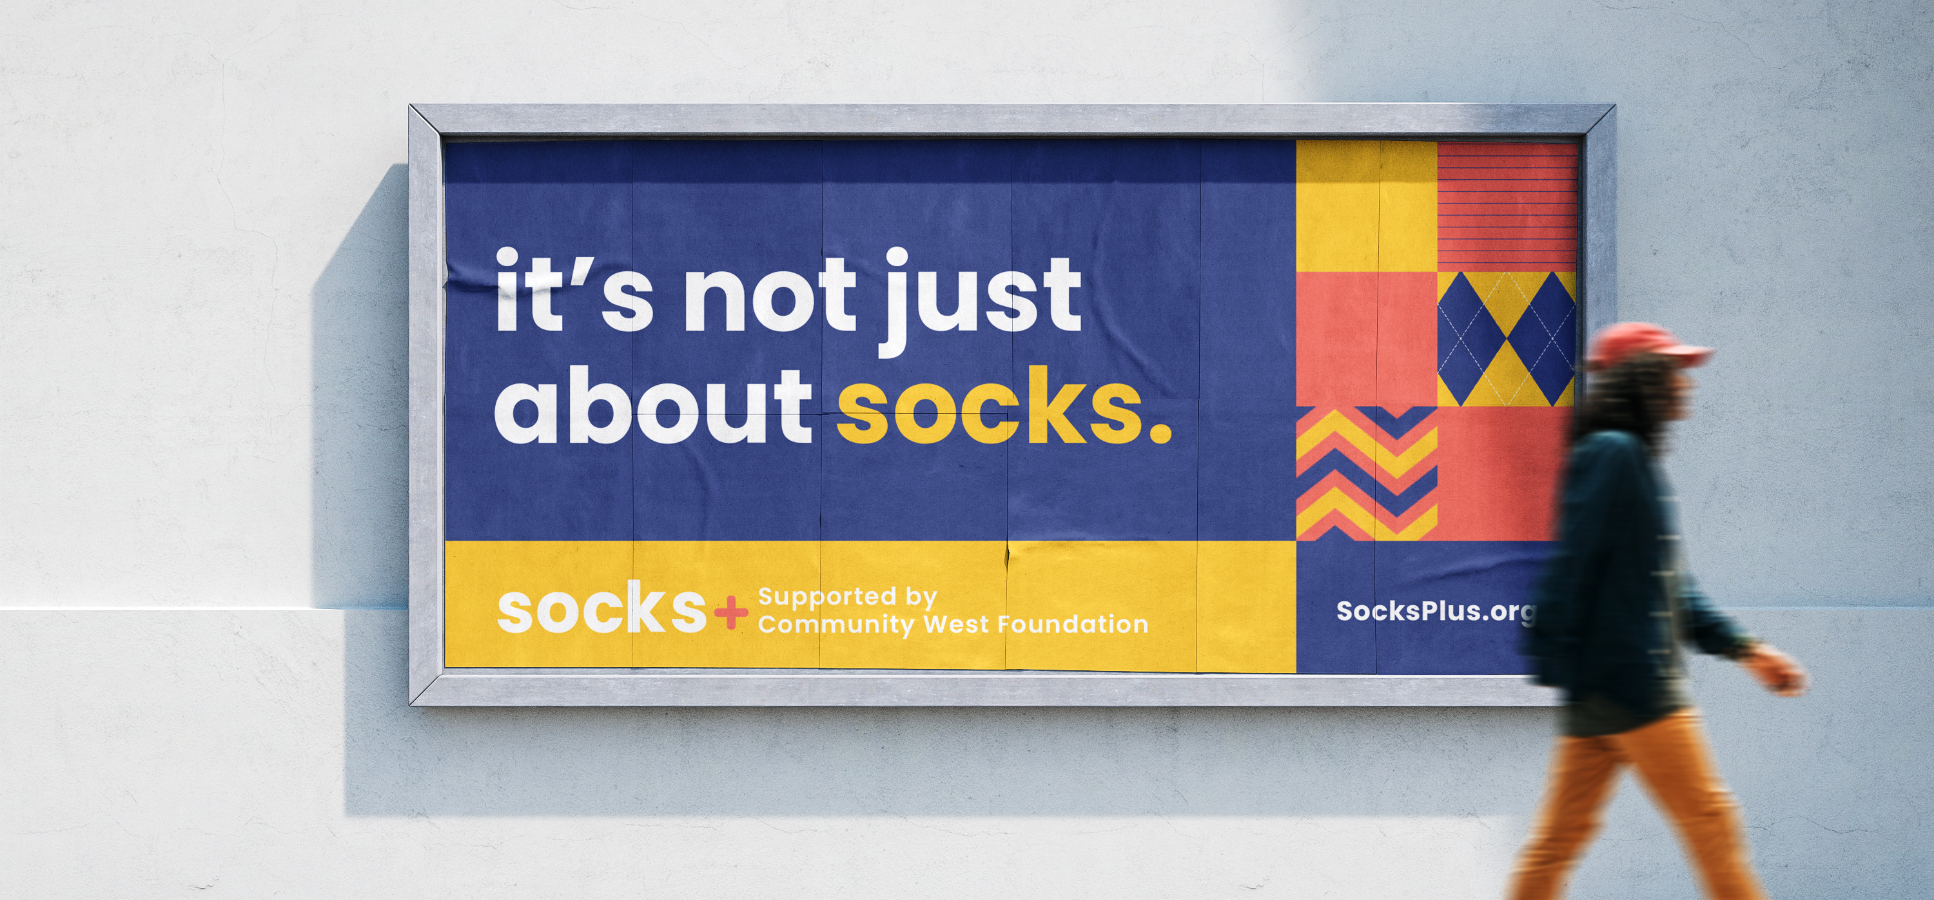 Socks+ Campaign billboard